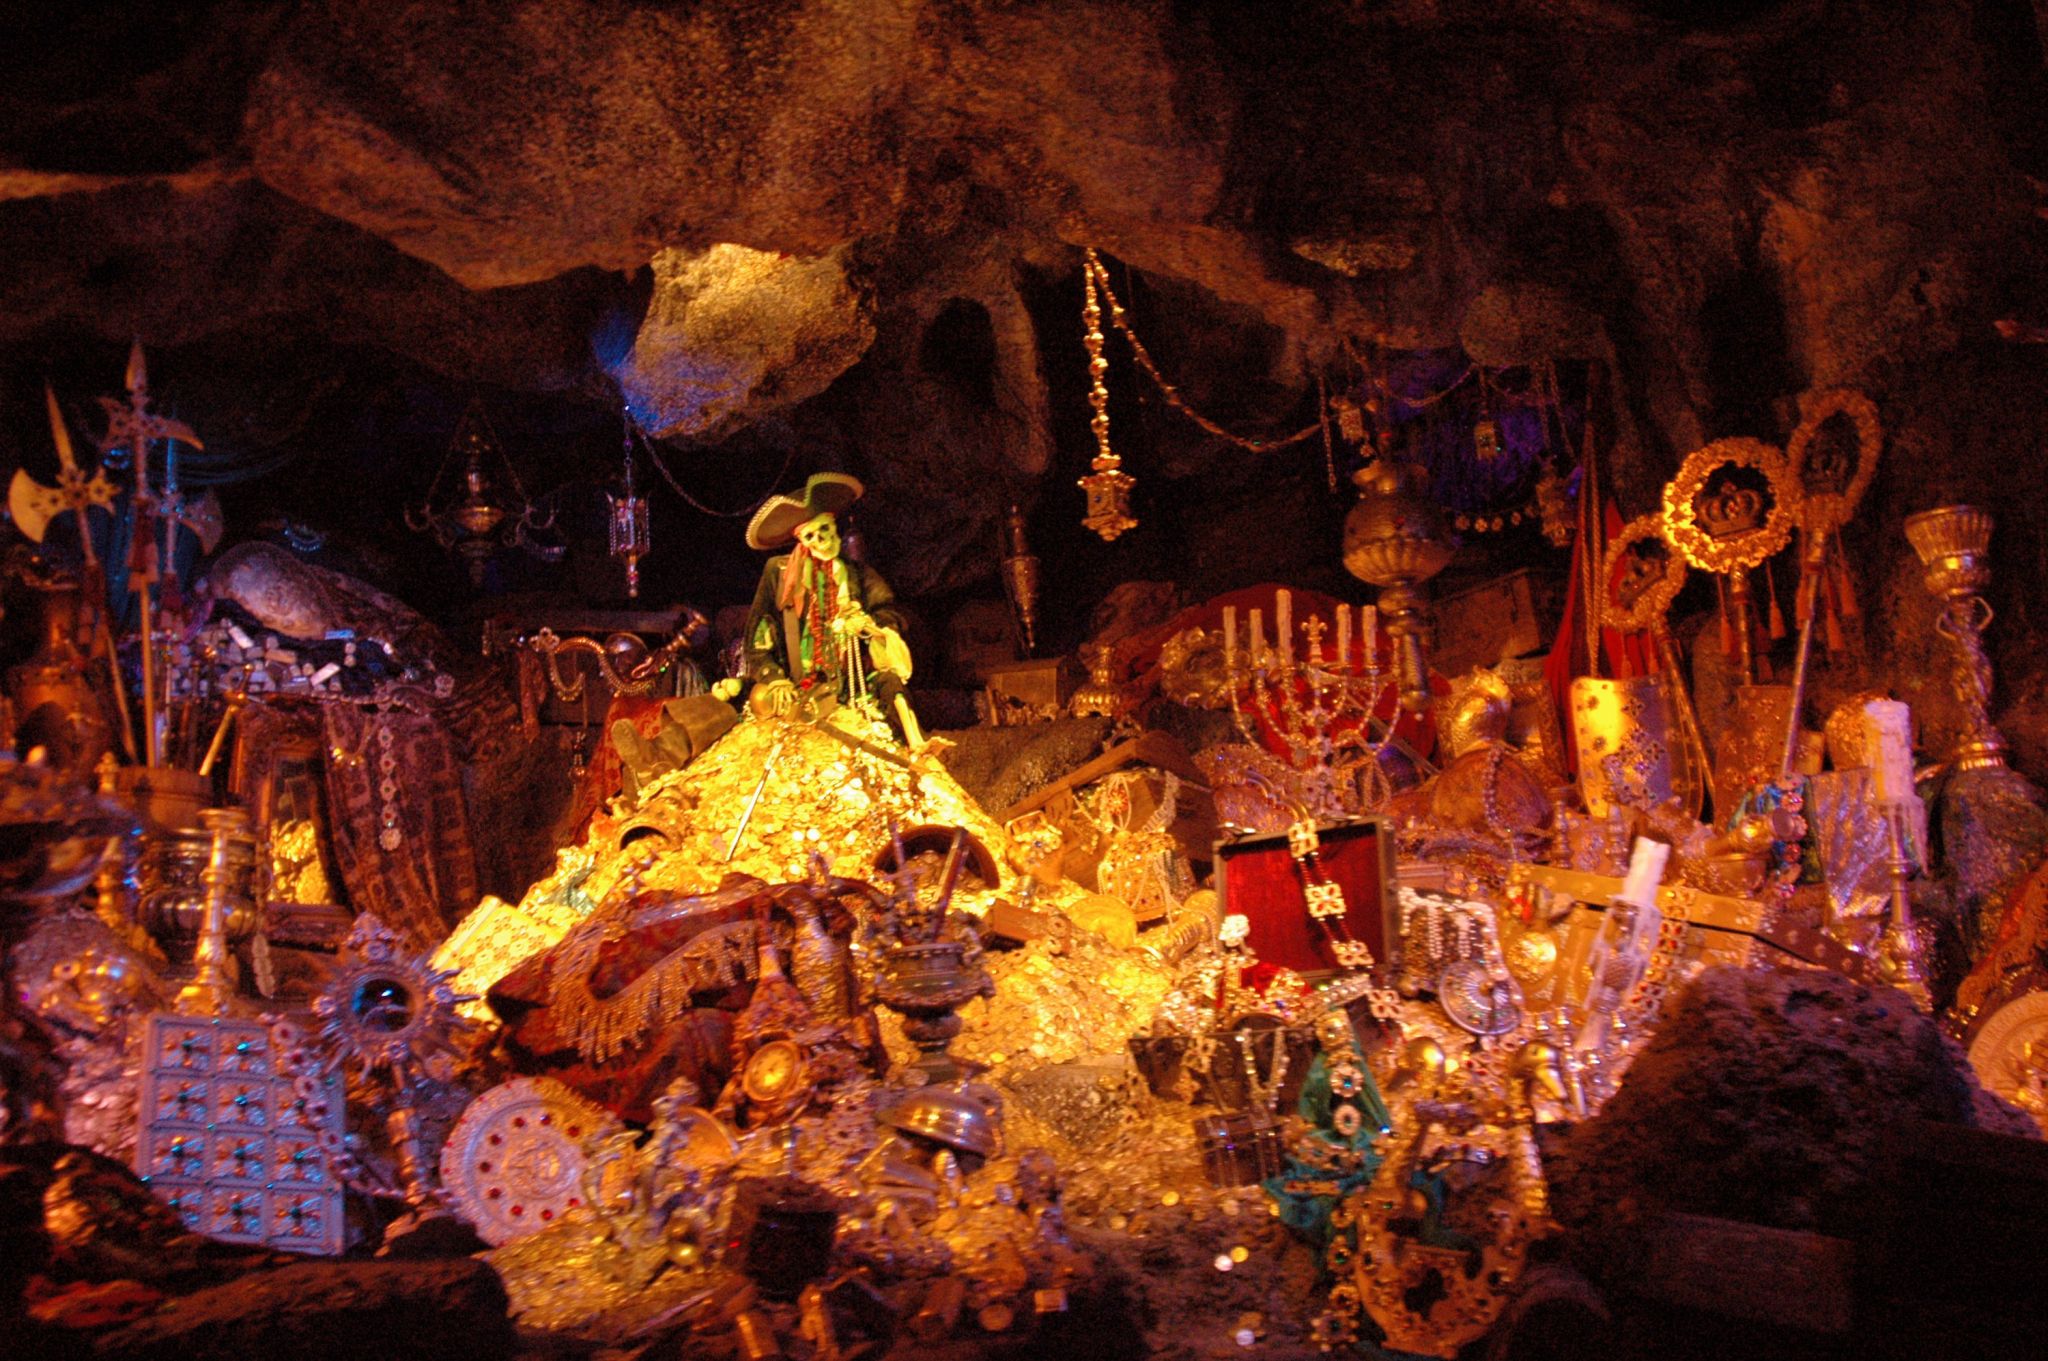 Disneyland’s Pirates of the Caribbean ride once had real human bones